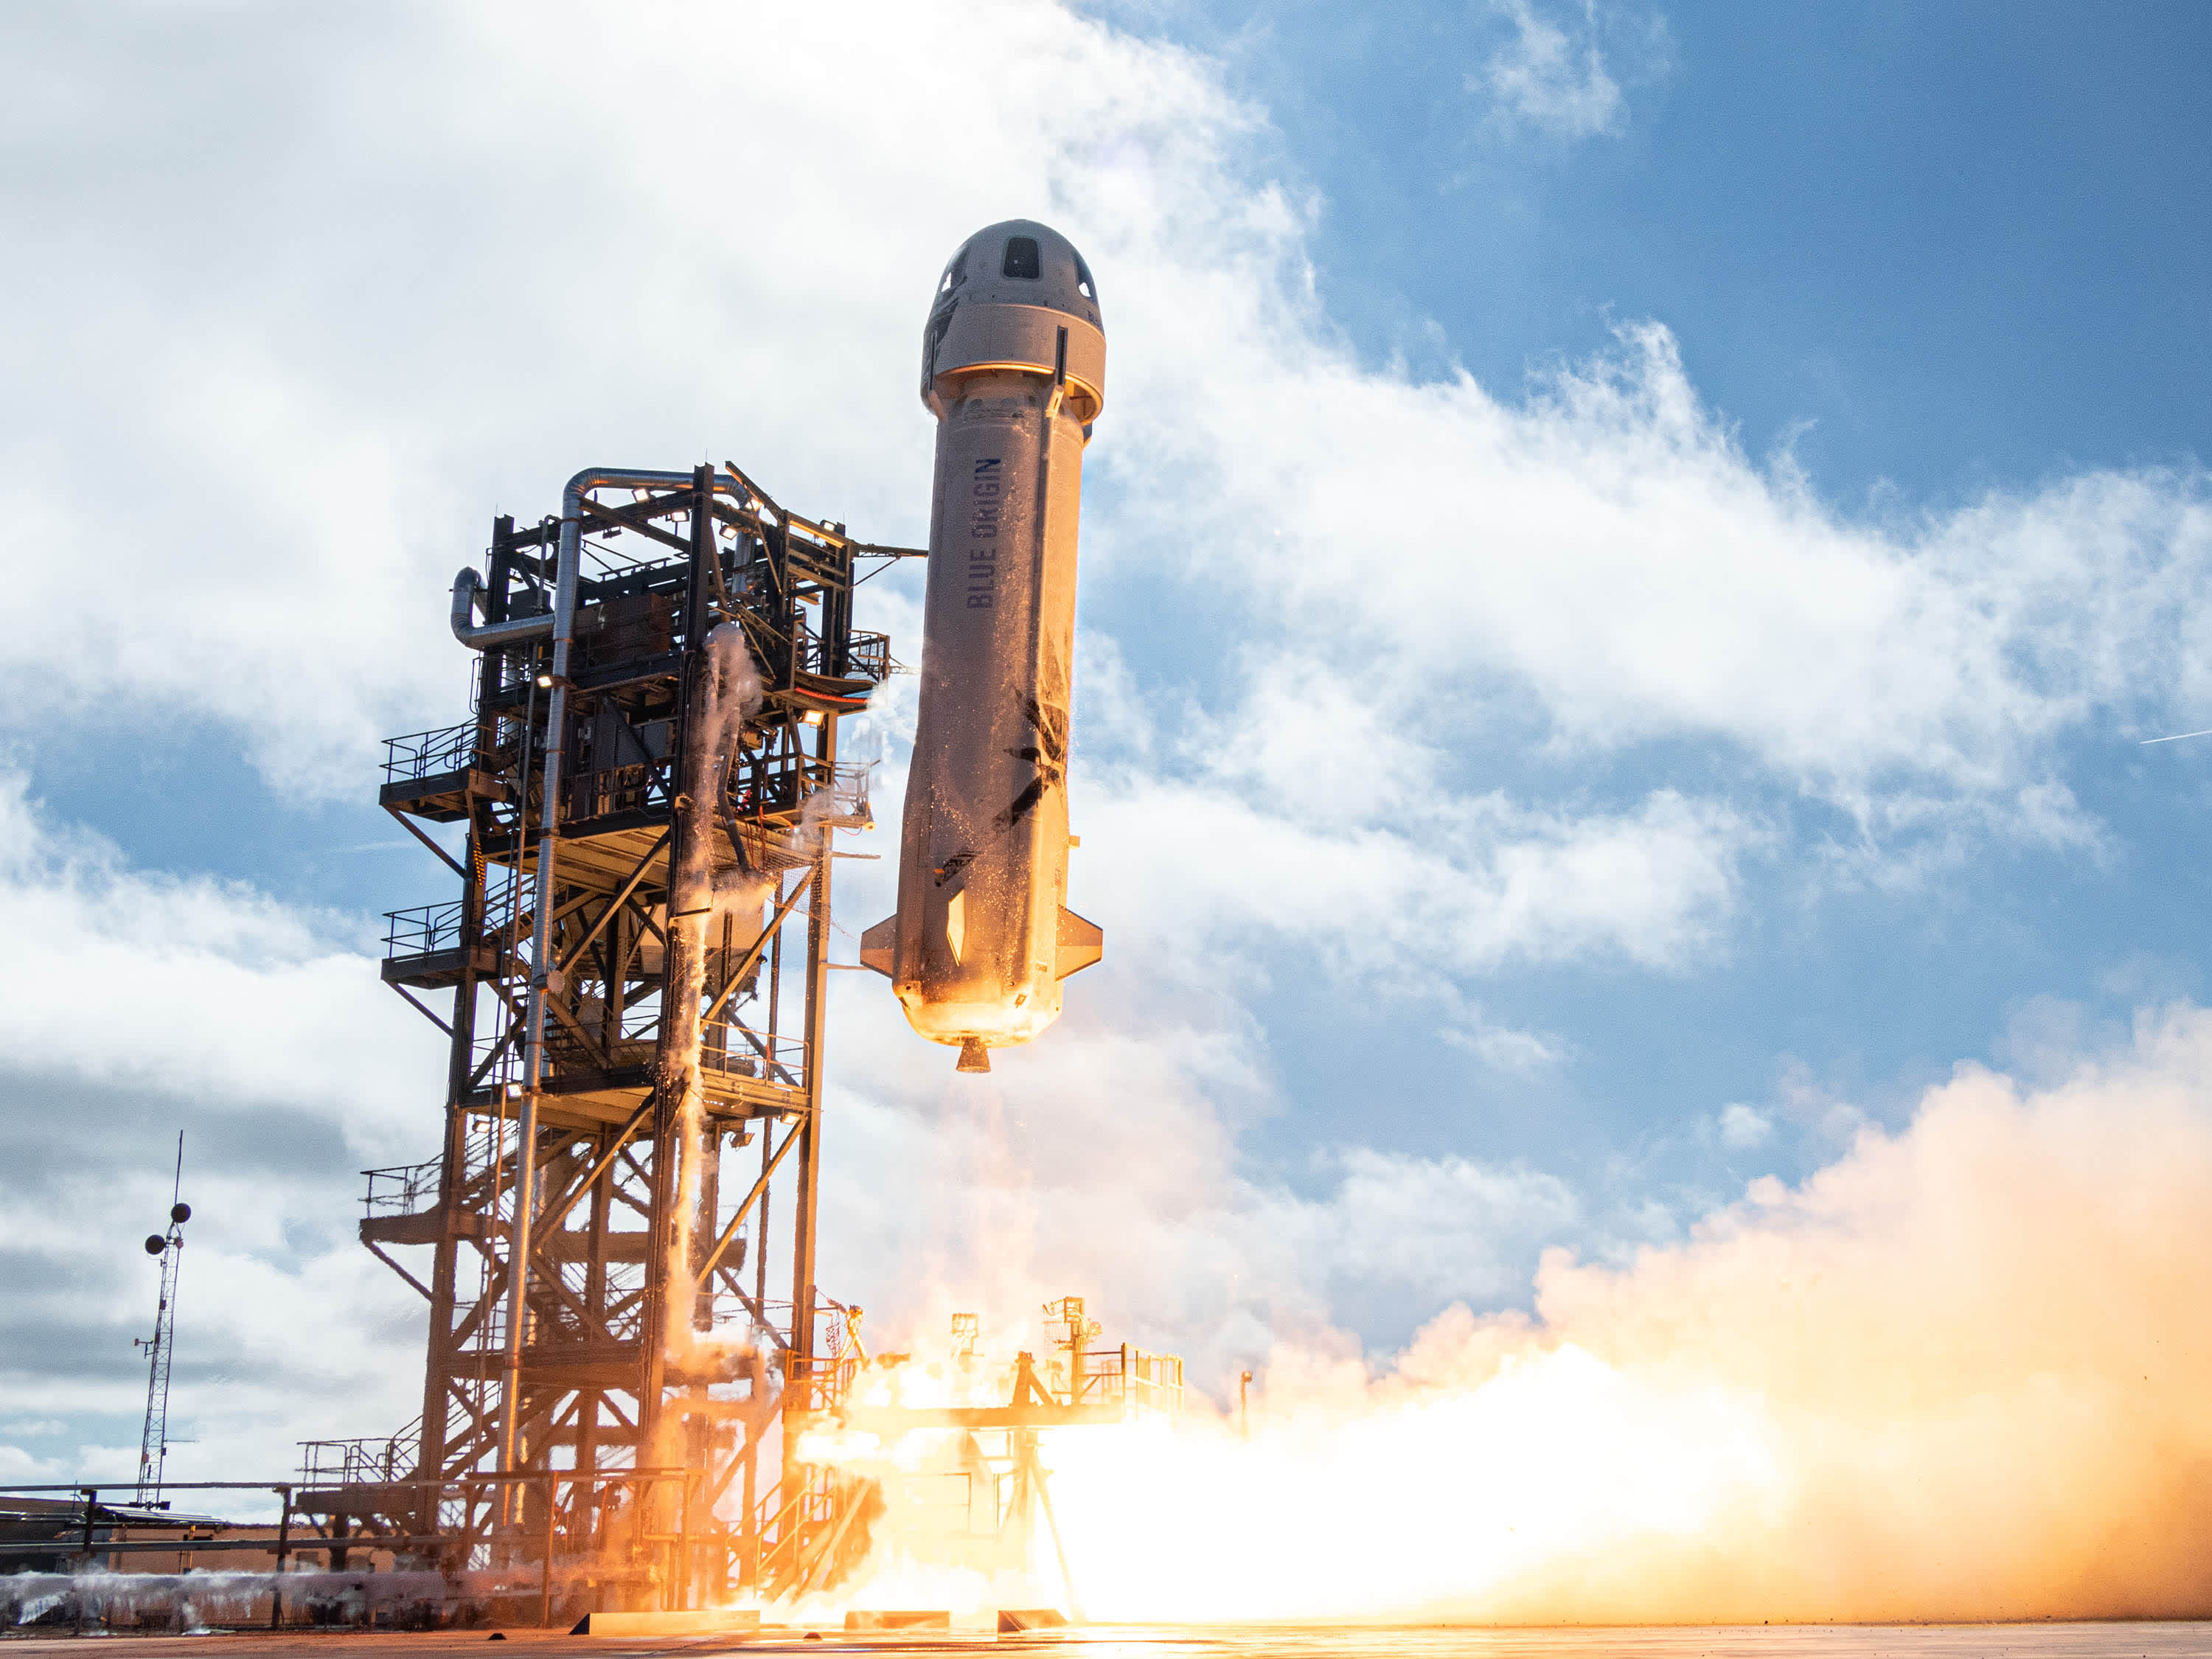 Jeff Bezos Travels Above Karman Line Onboard Blue Origin’s Fully Autonomous Spacecraft New Shepard